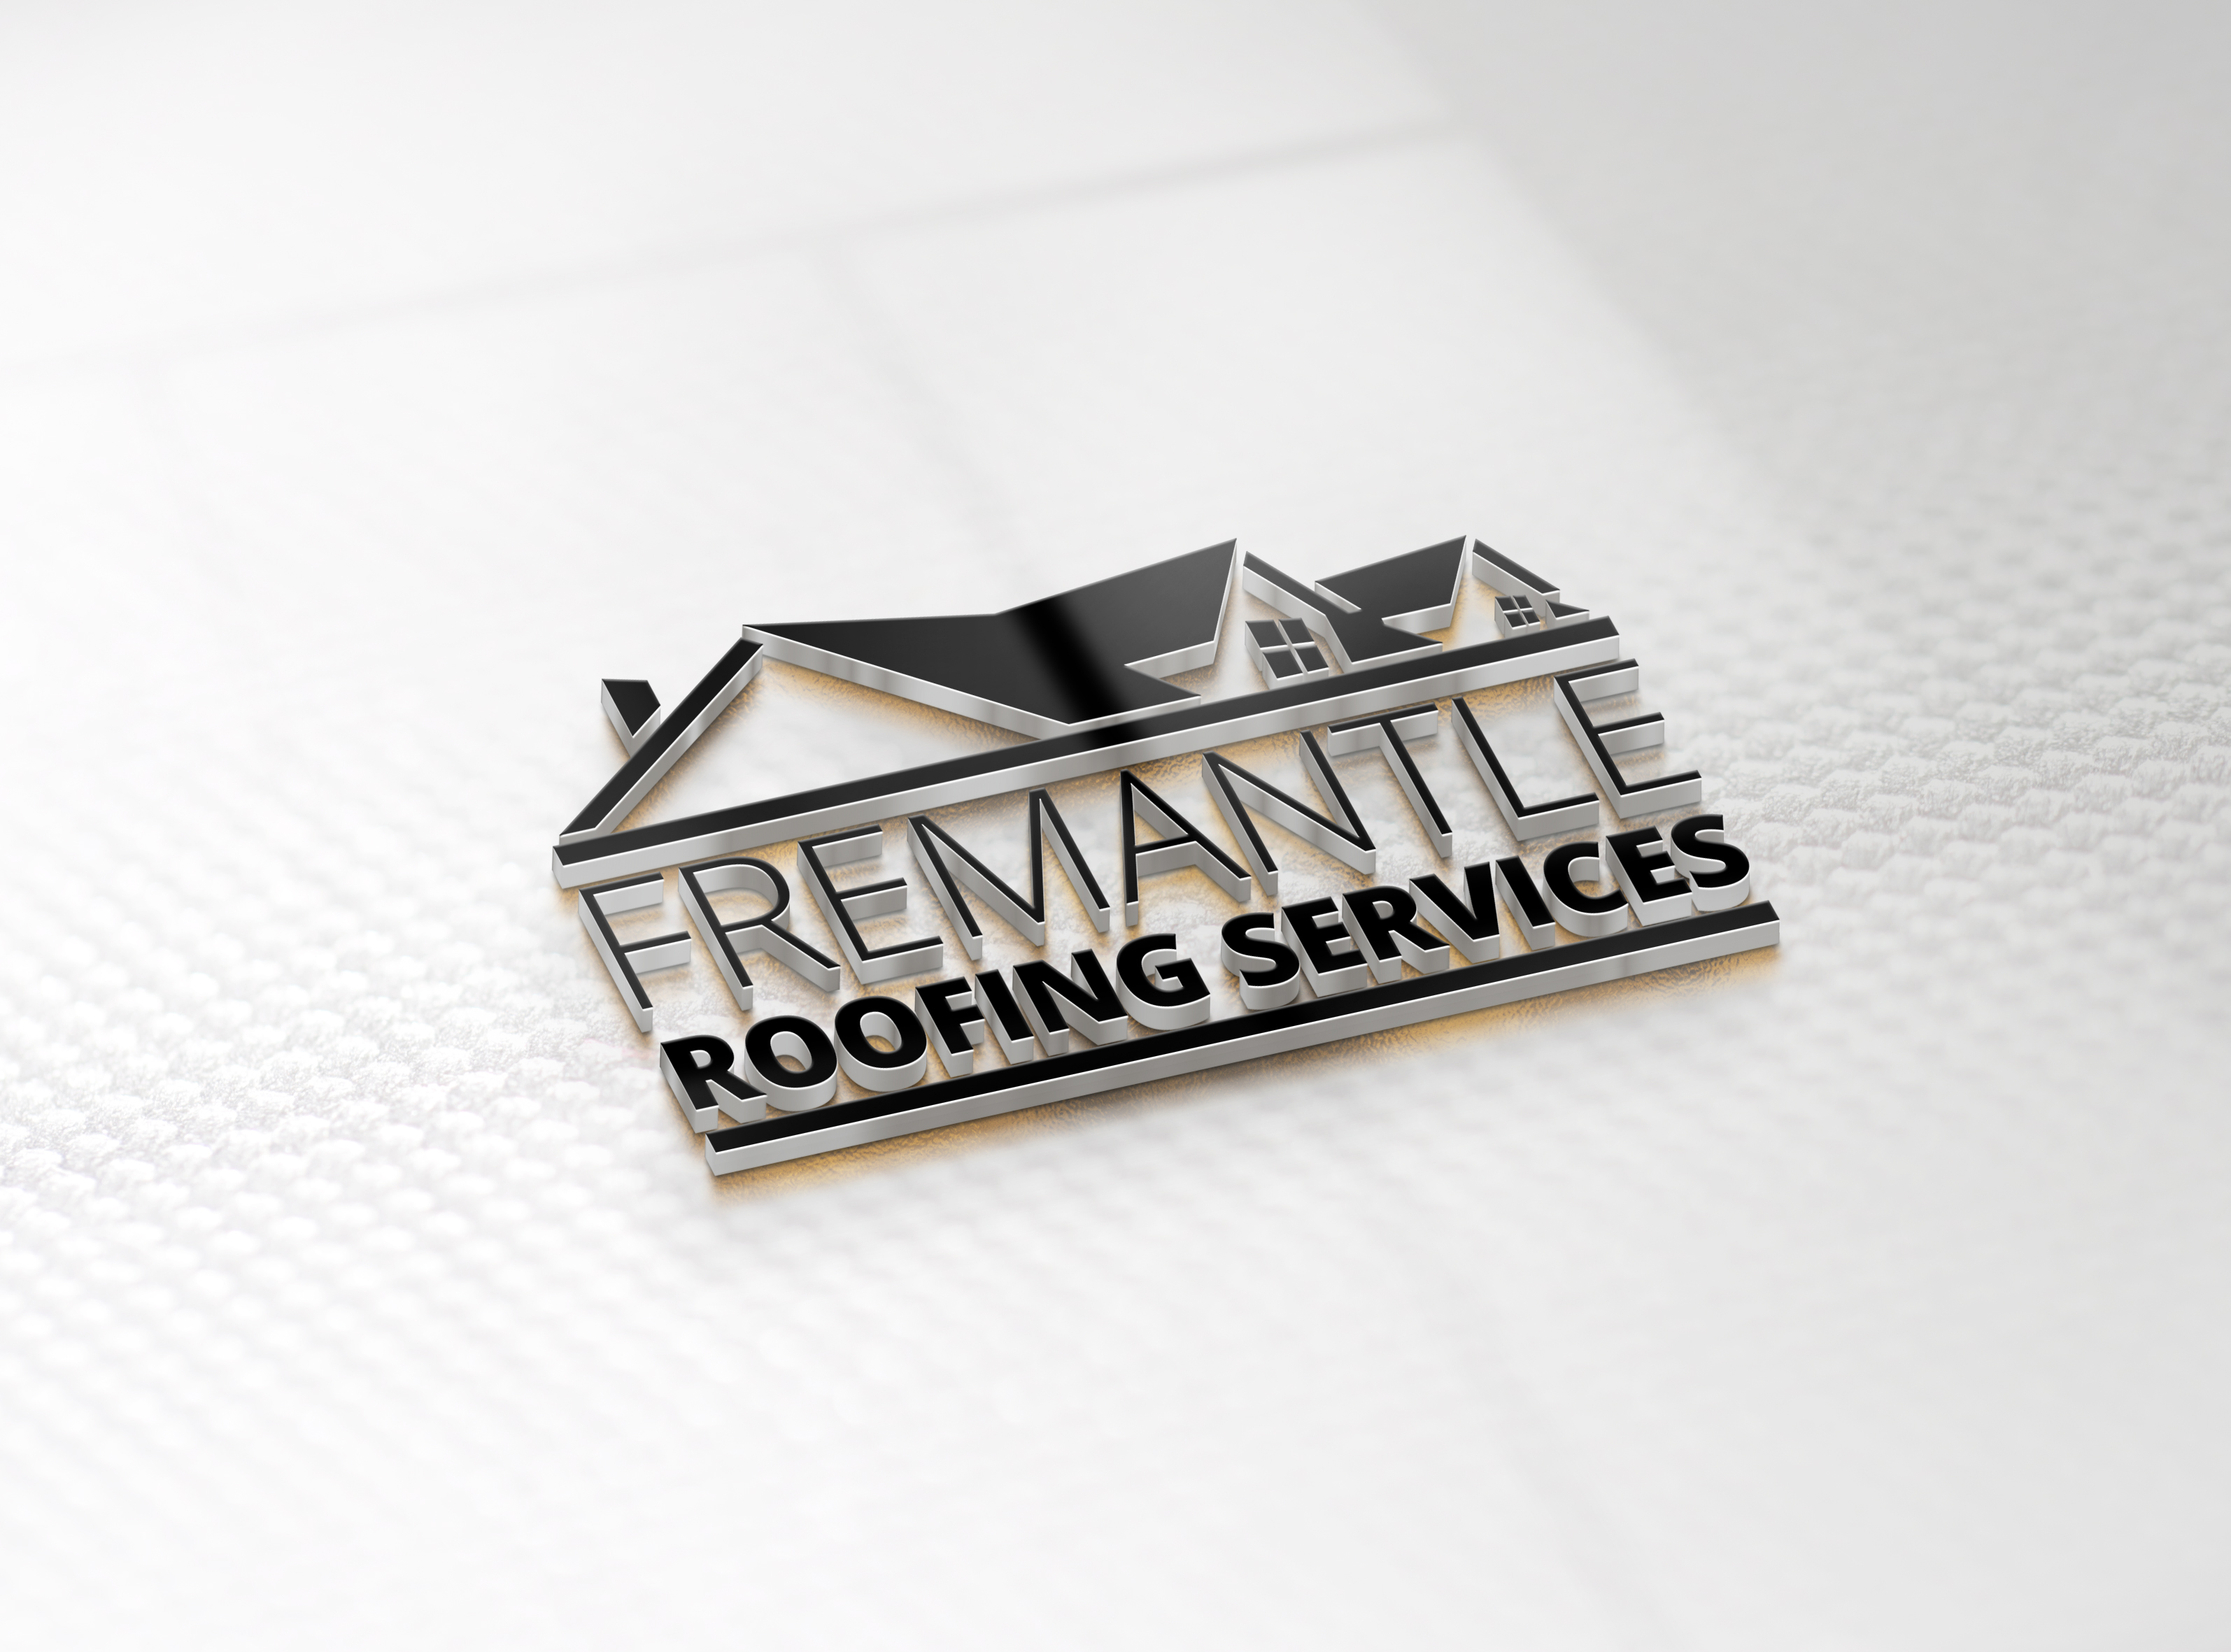 Fremantle Roofing Services - Roof Restoration Perth